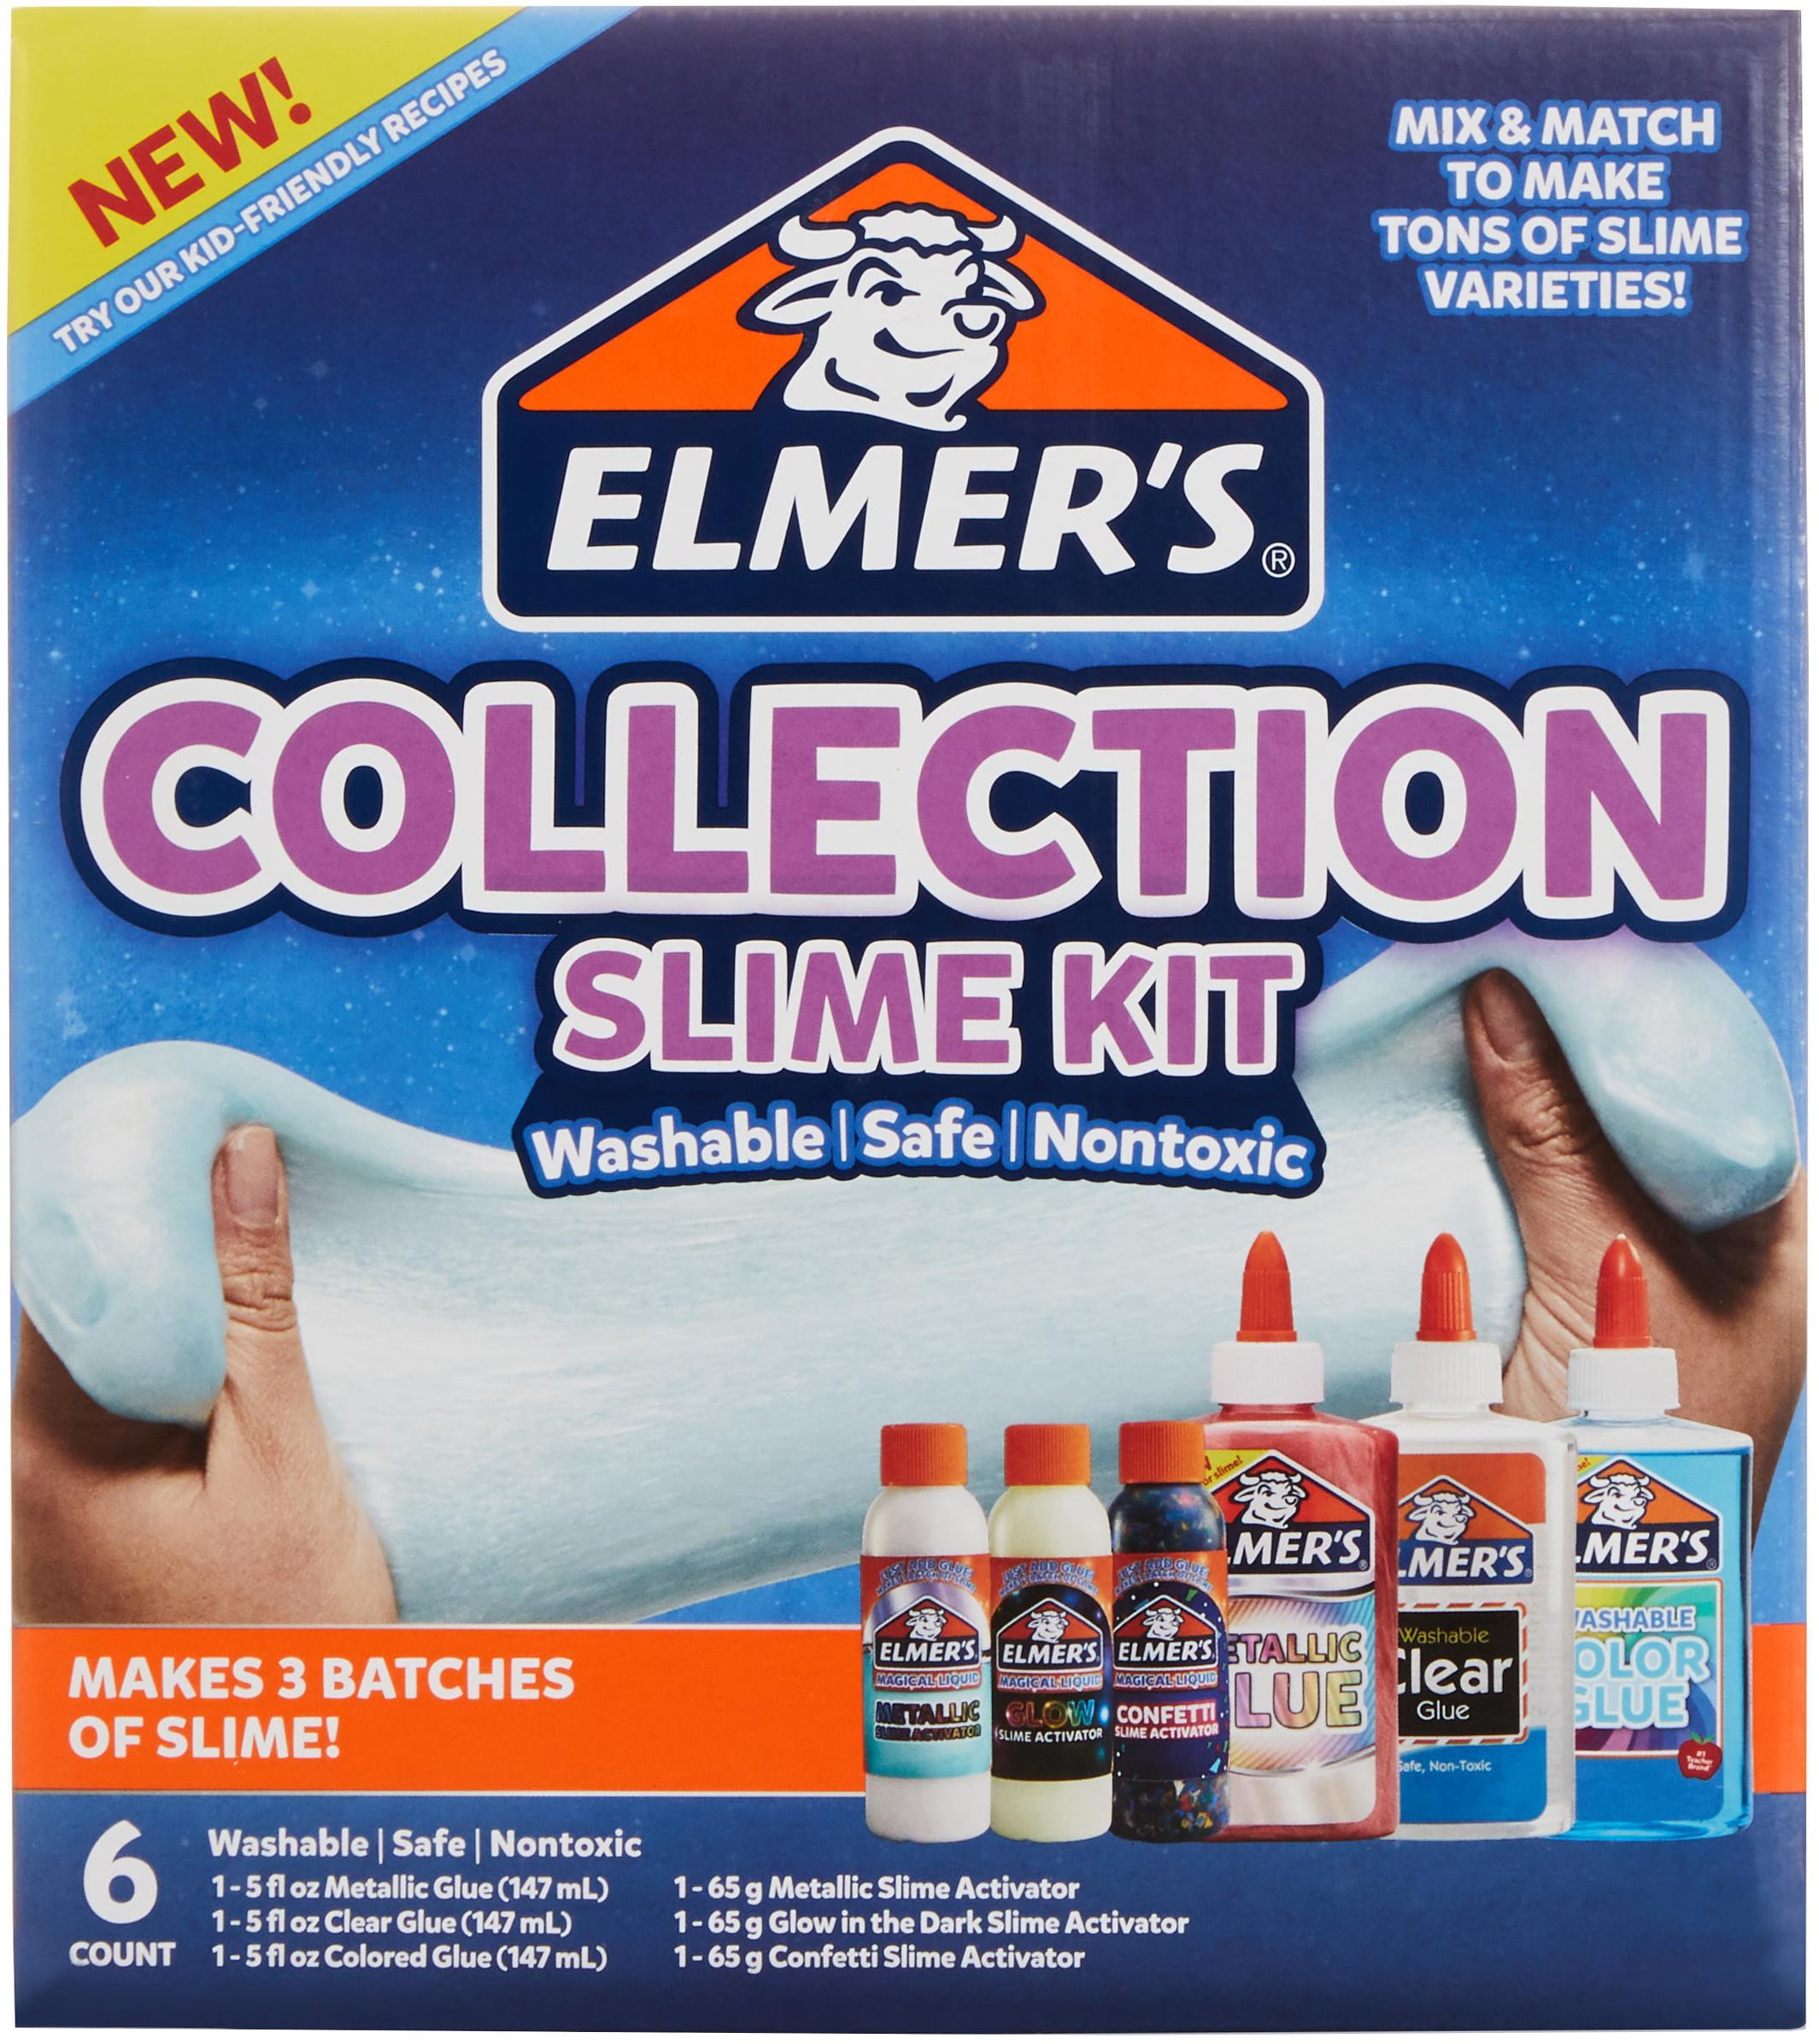 Elmers Collection Slime Kit: Translucent & Metallic Glue, Glow in the Dark & Confetti Magical Liquid Activator, 6 Count